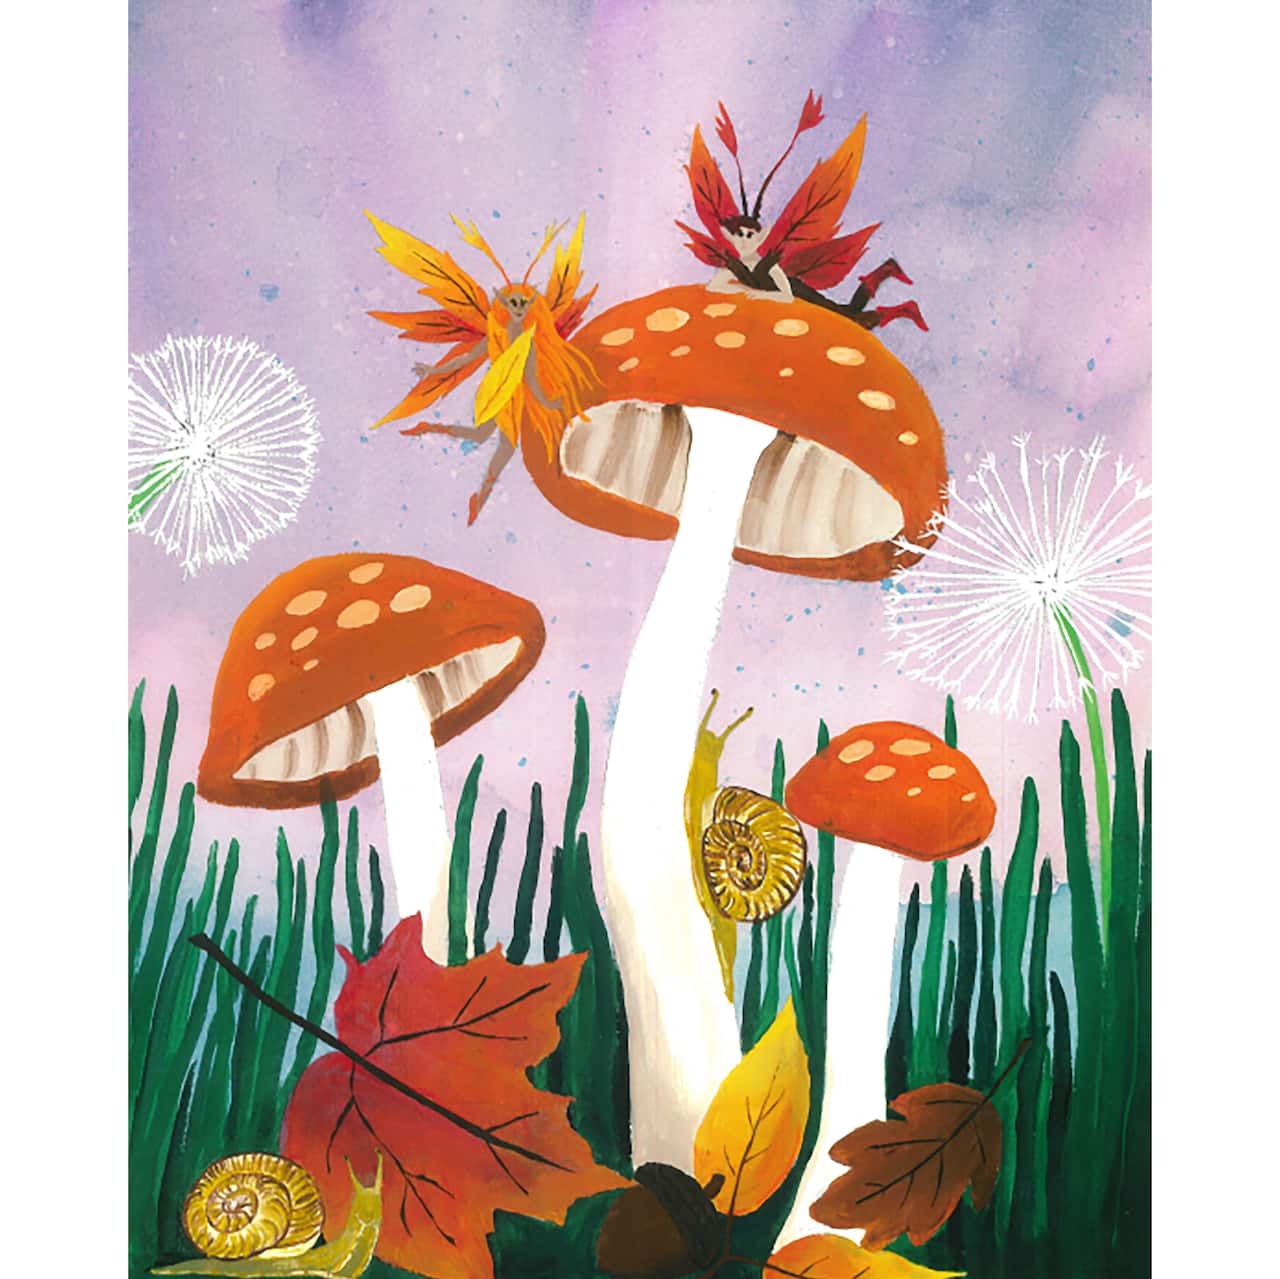 Sparkly Selections Mushrooms and Fairy - Local Utah Artist Rachel H. Diamond  Painting Kit, Round Diamonds